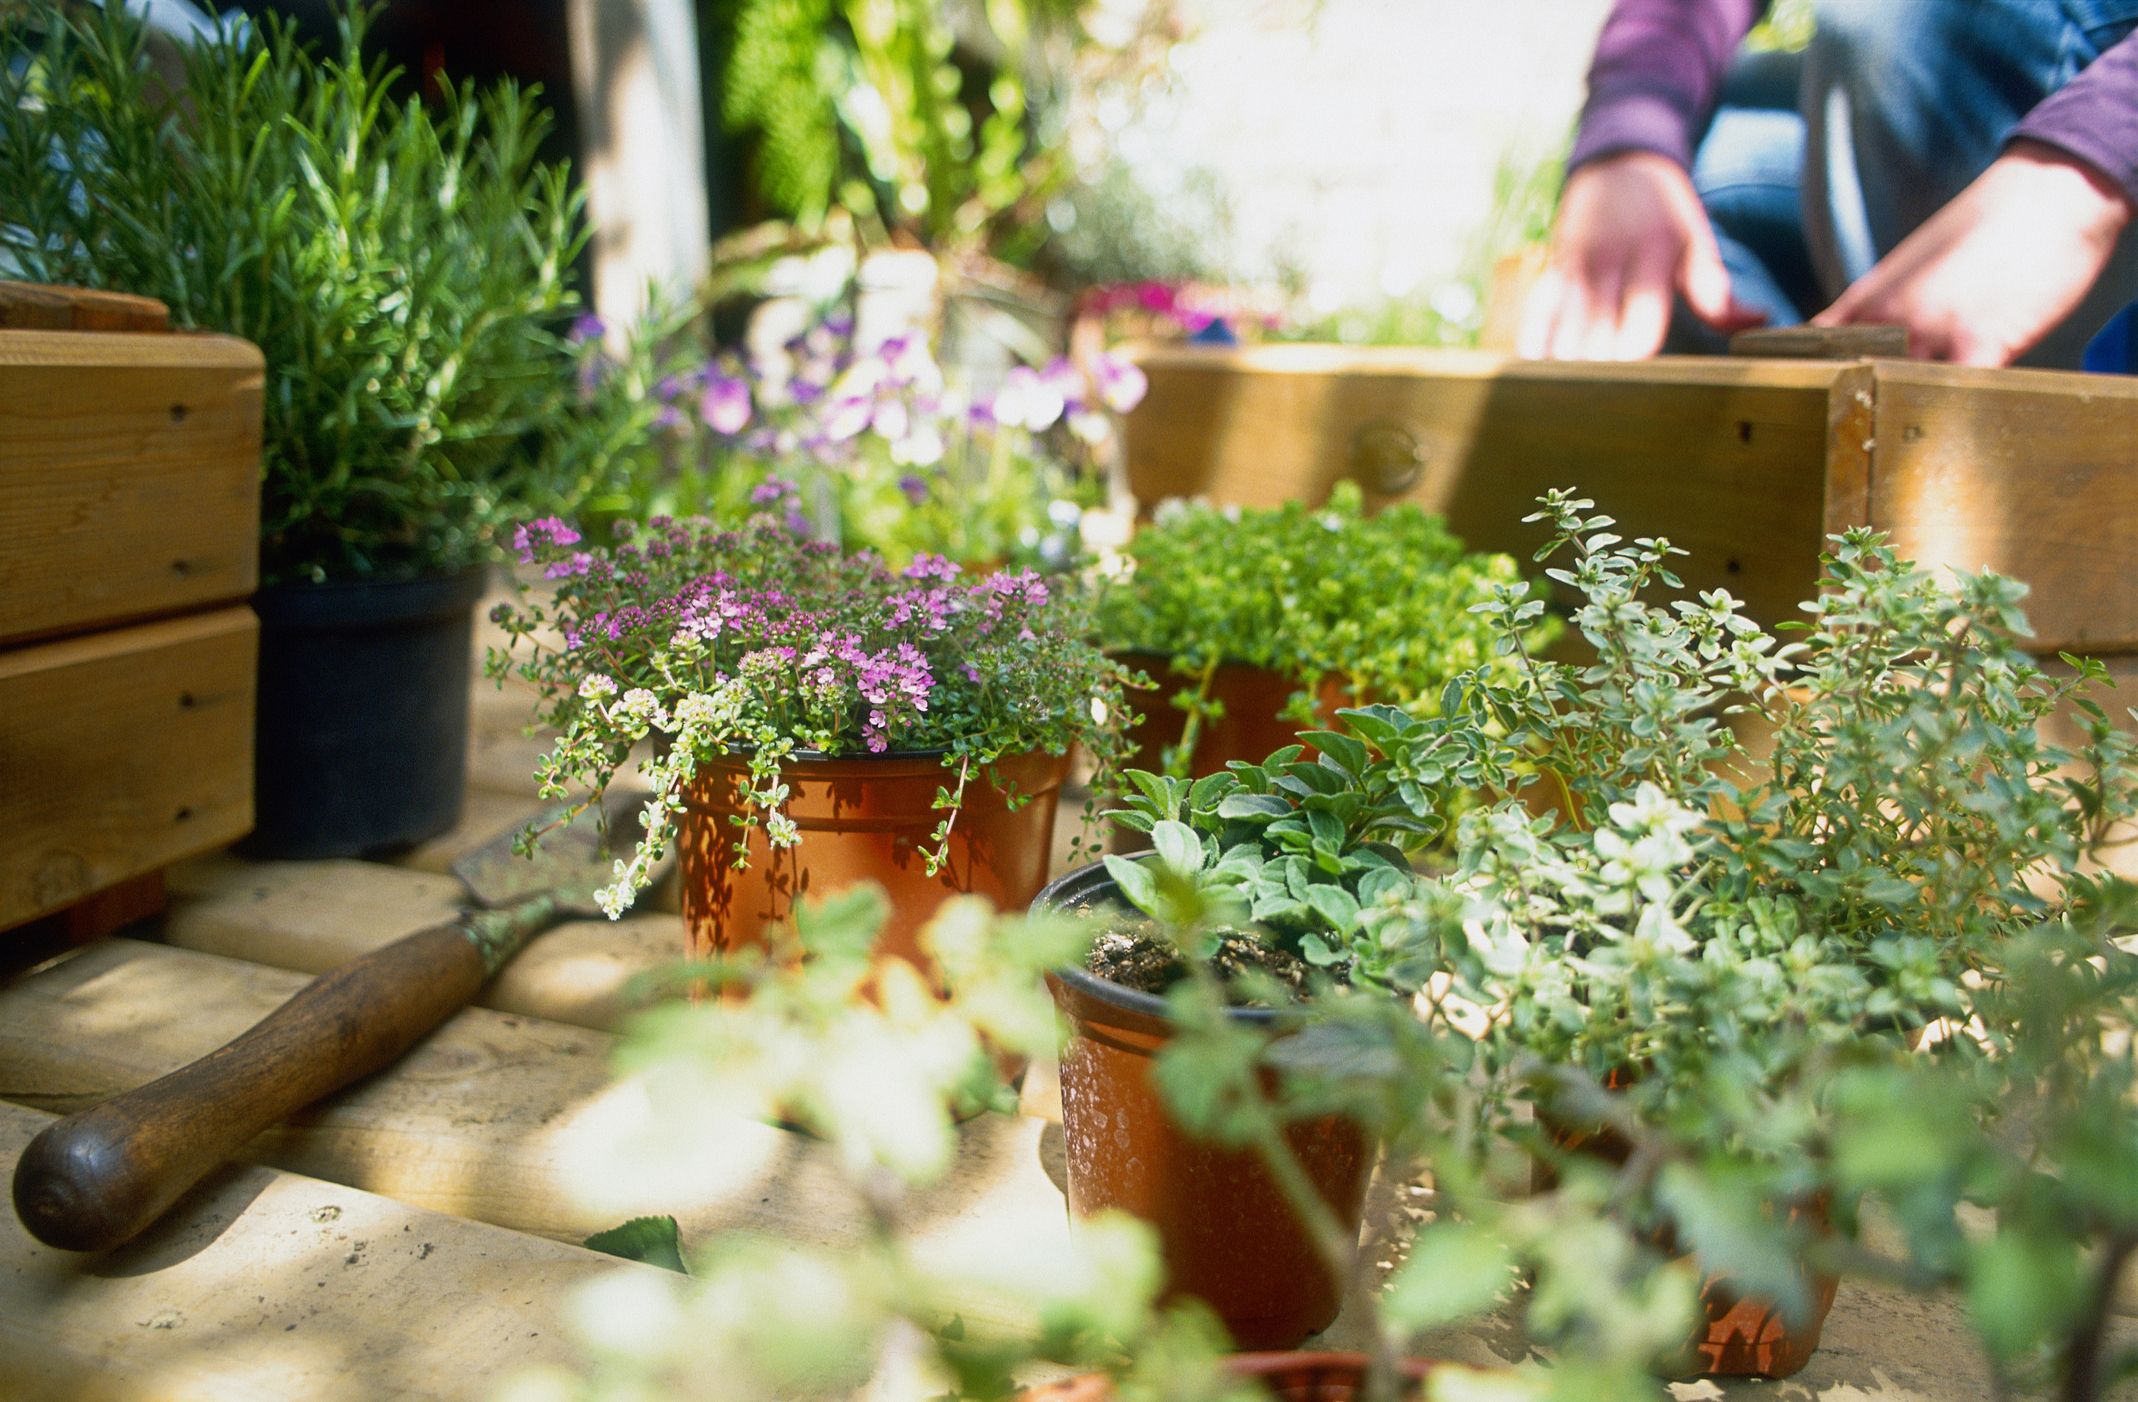 Garden Maintenance Prices: Cost of Hiring a Gardener